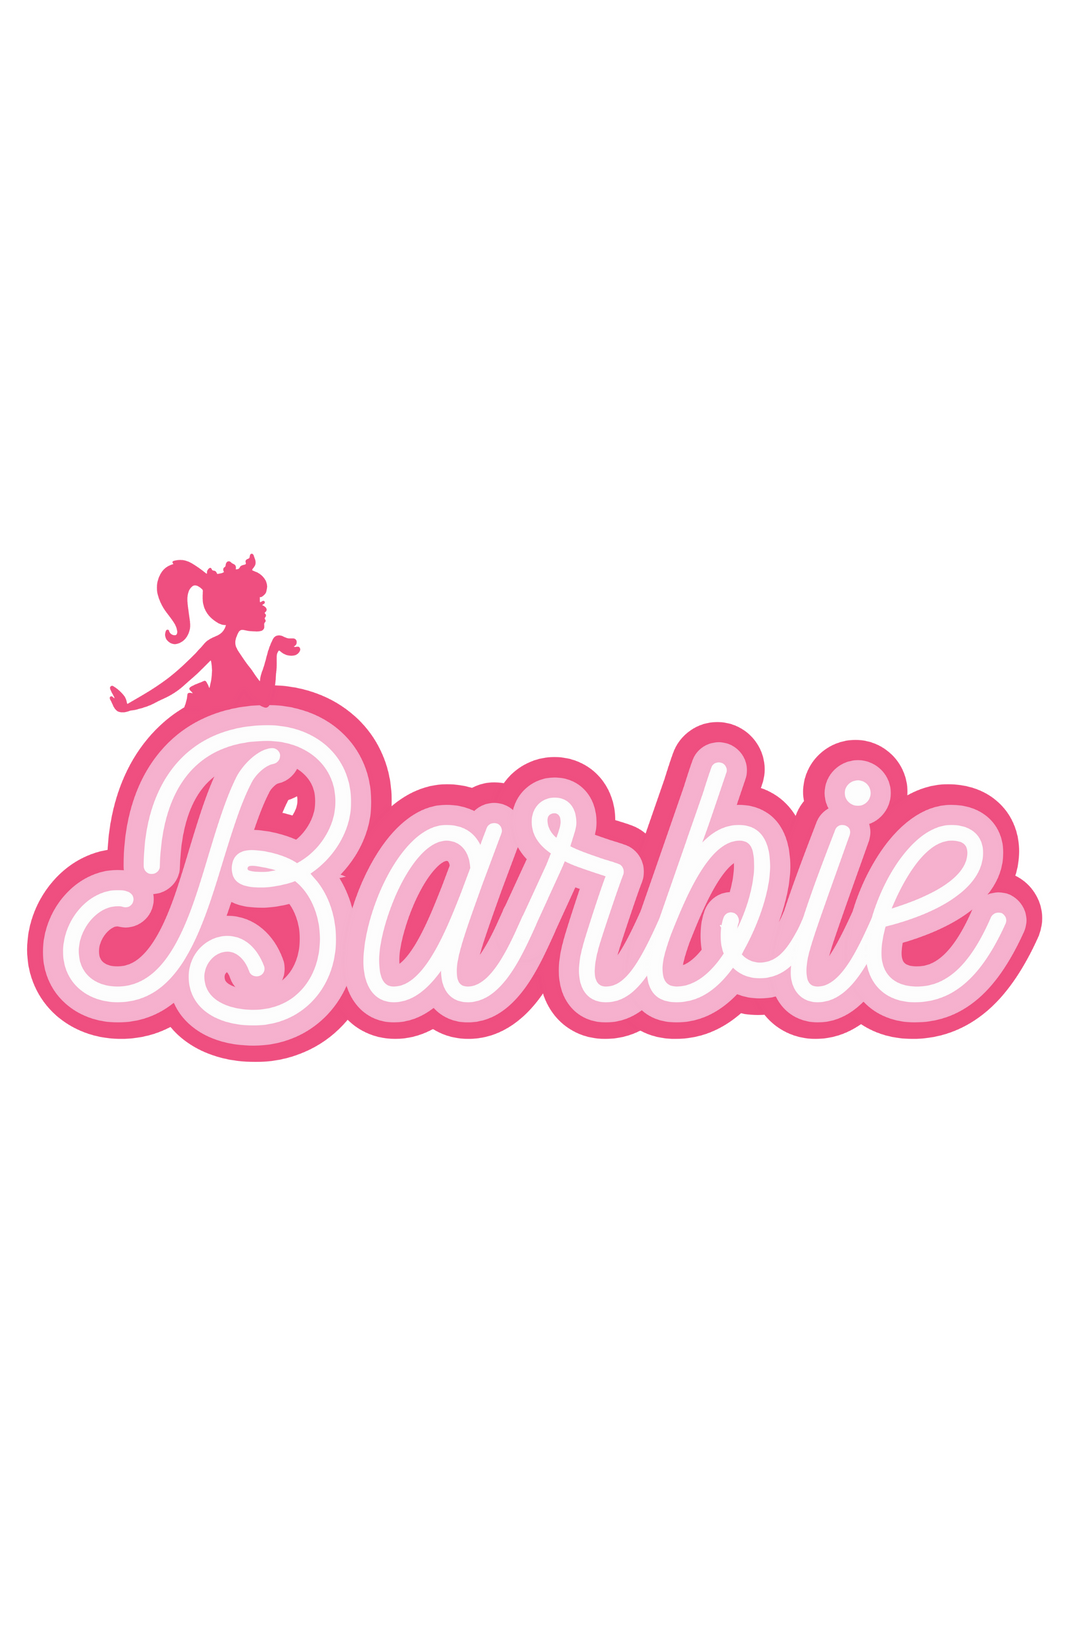 Barbie Printed T-Shirt For Women - WowWaves - 1